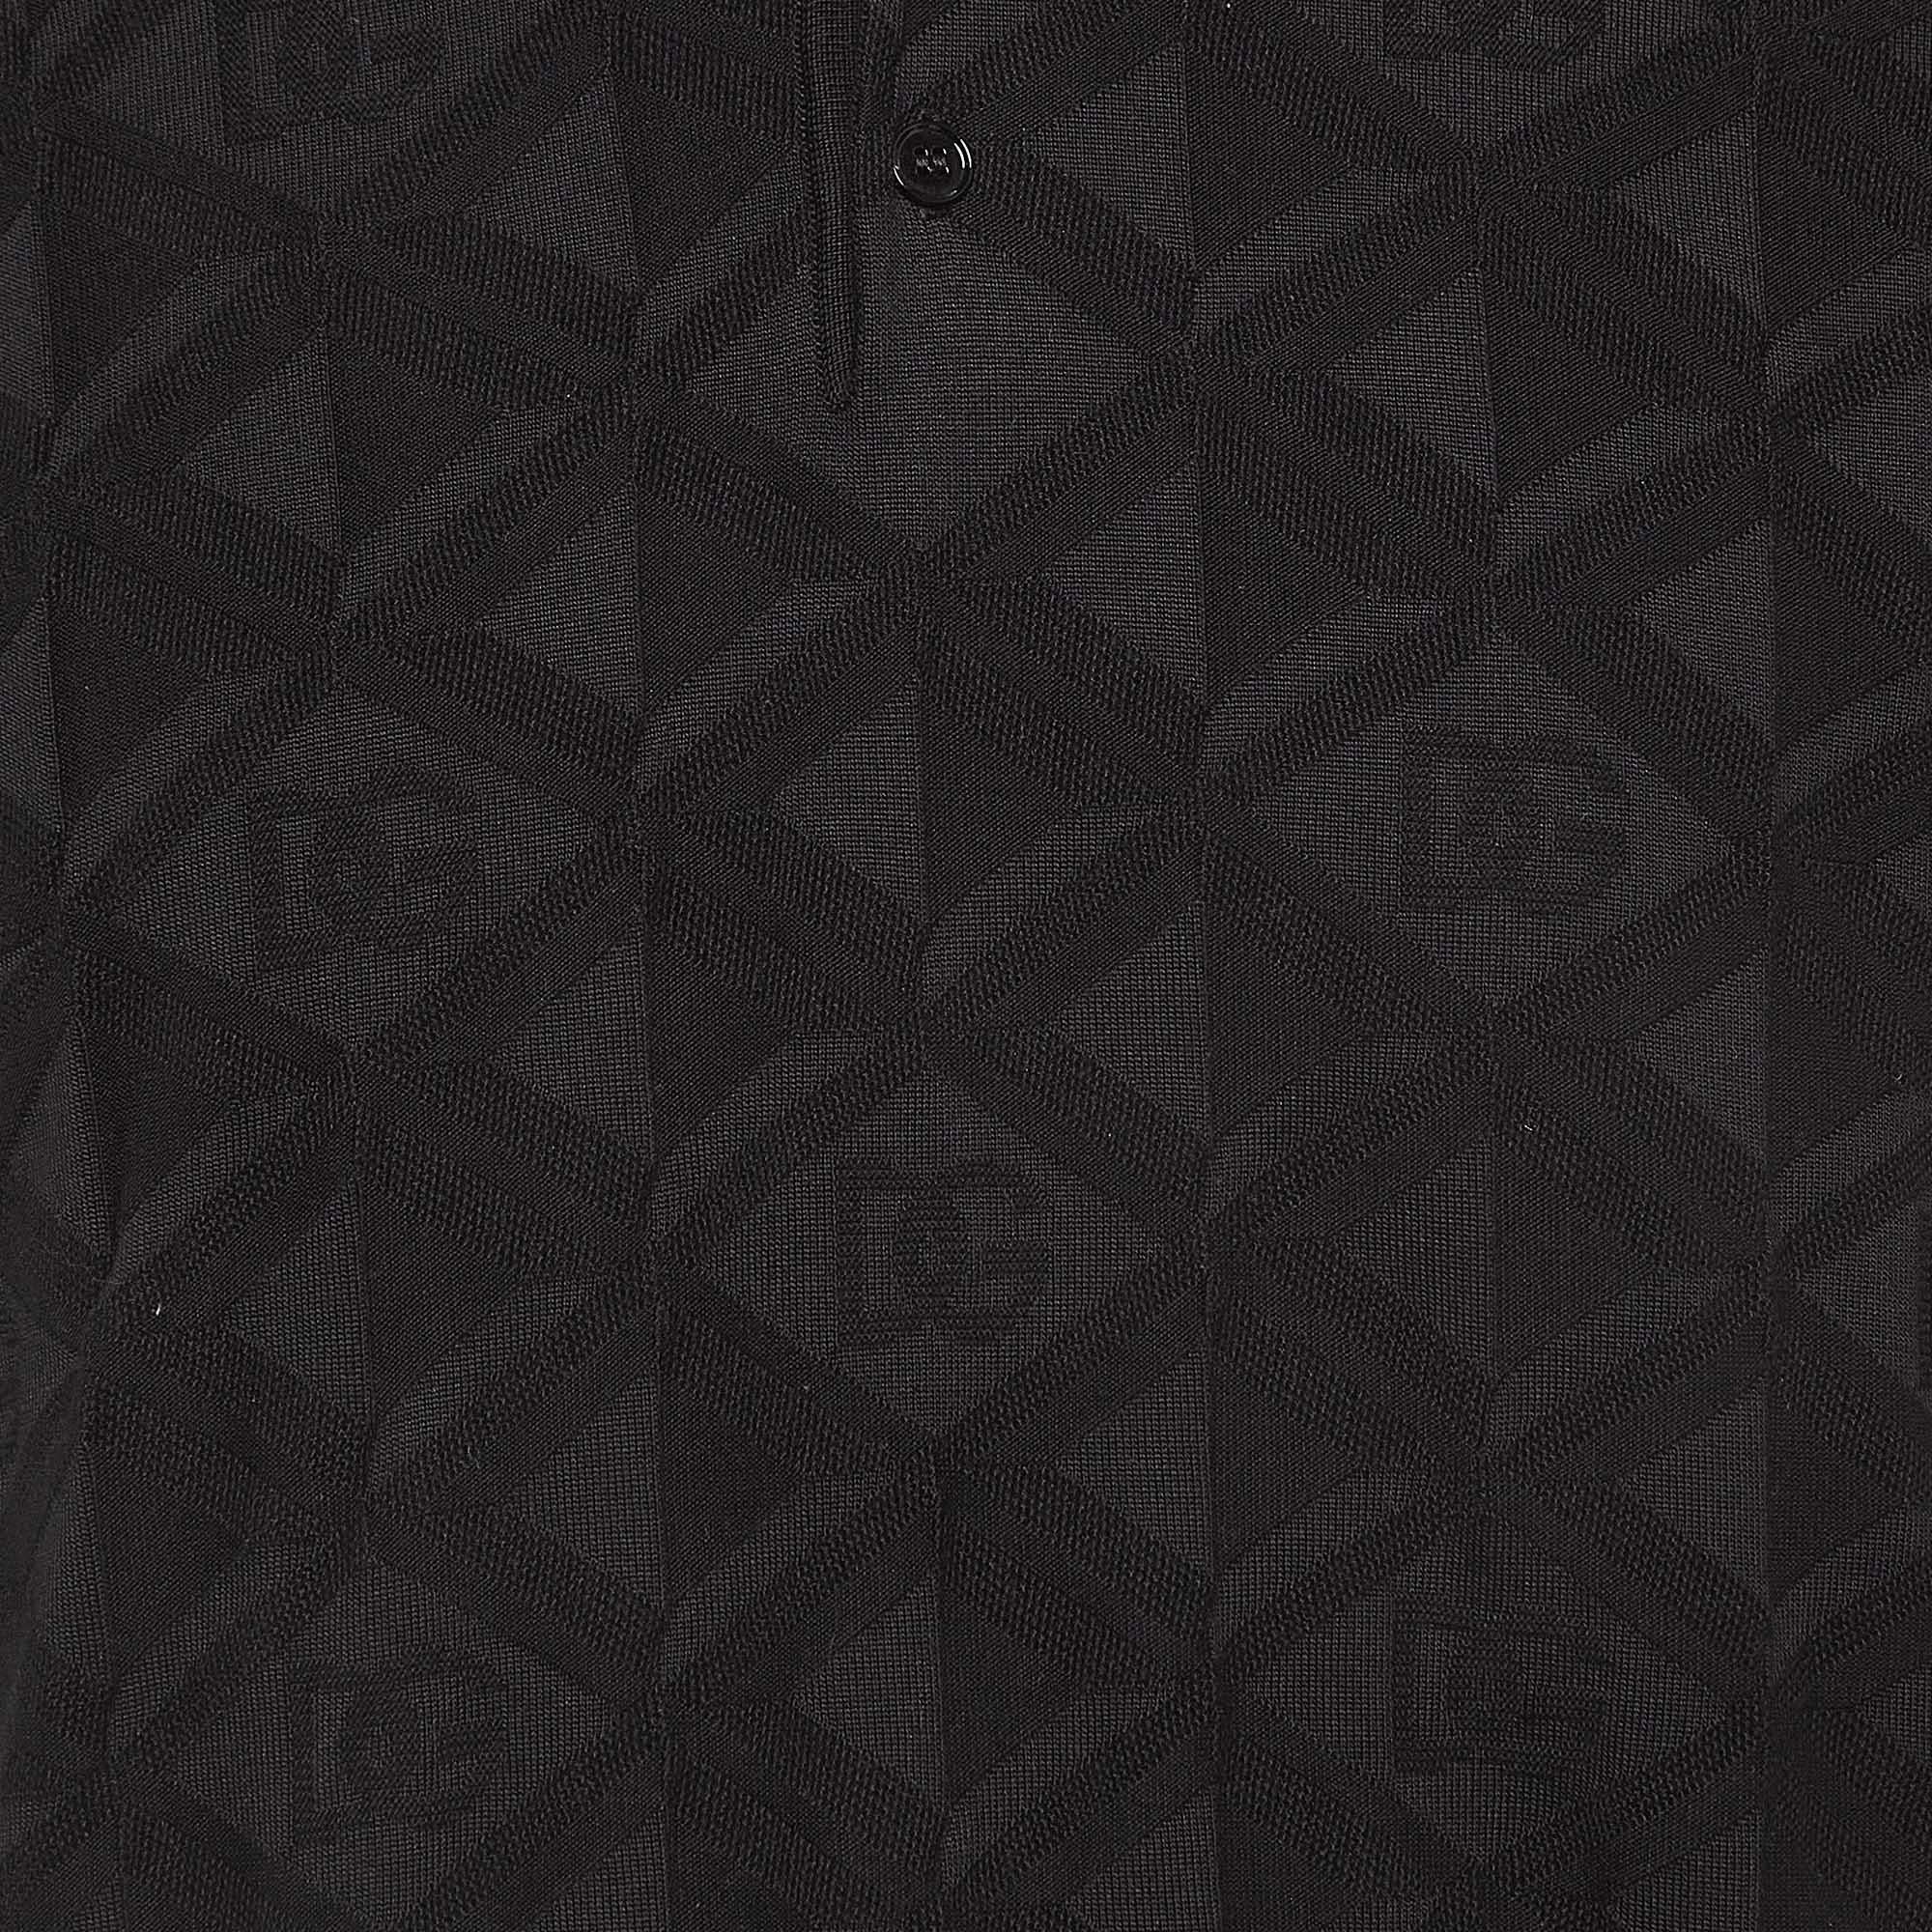 Dolce & Gabbana Black DG Textured Silk Knit Polo T-Shirt XXL In Excellent Condition For Sale In Dubai, Al Qouz 2